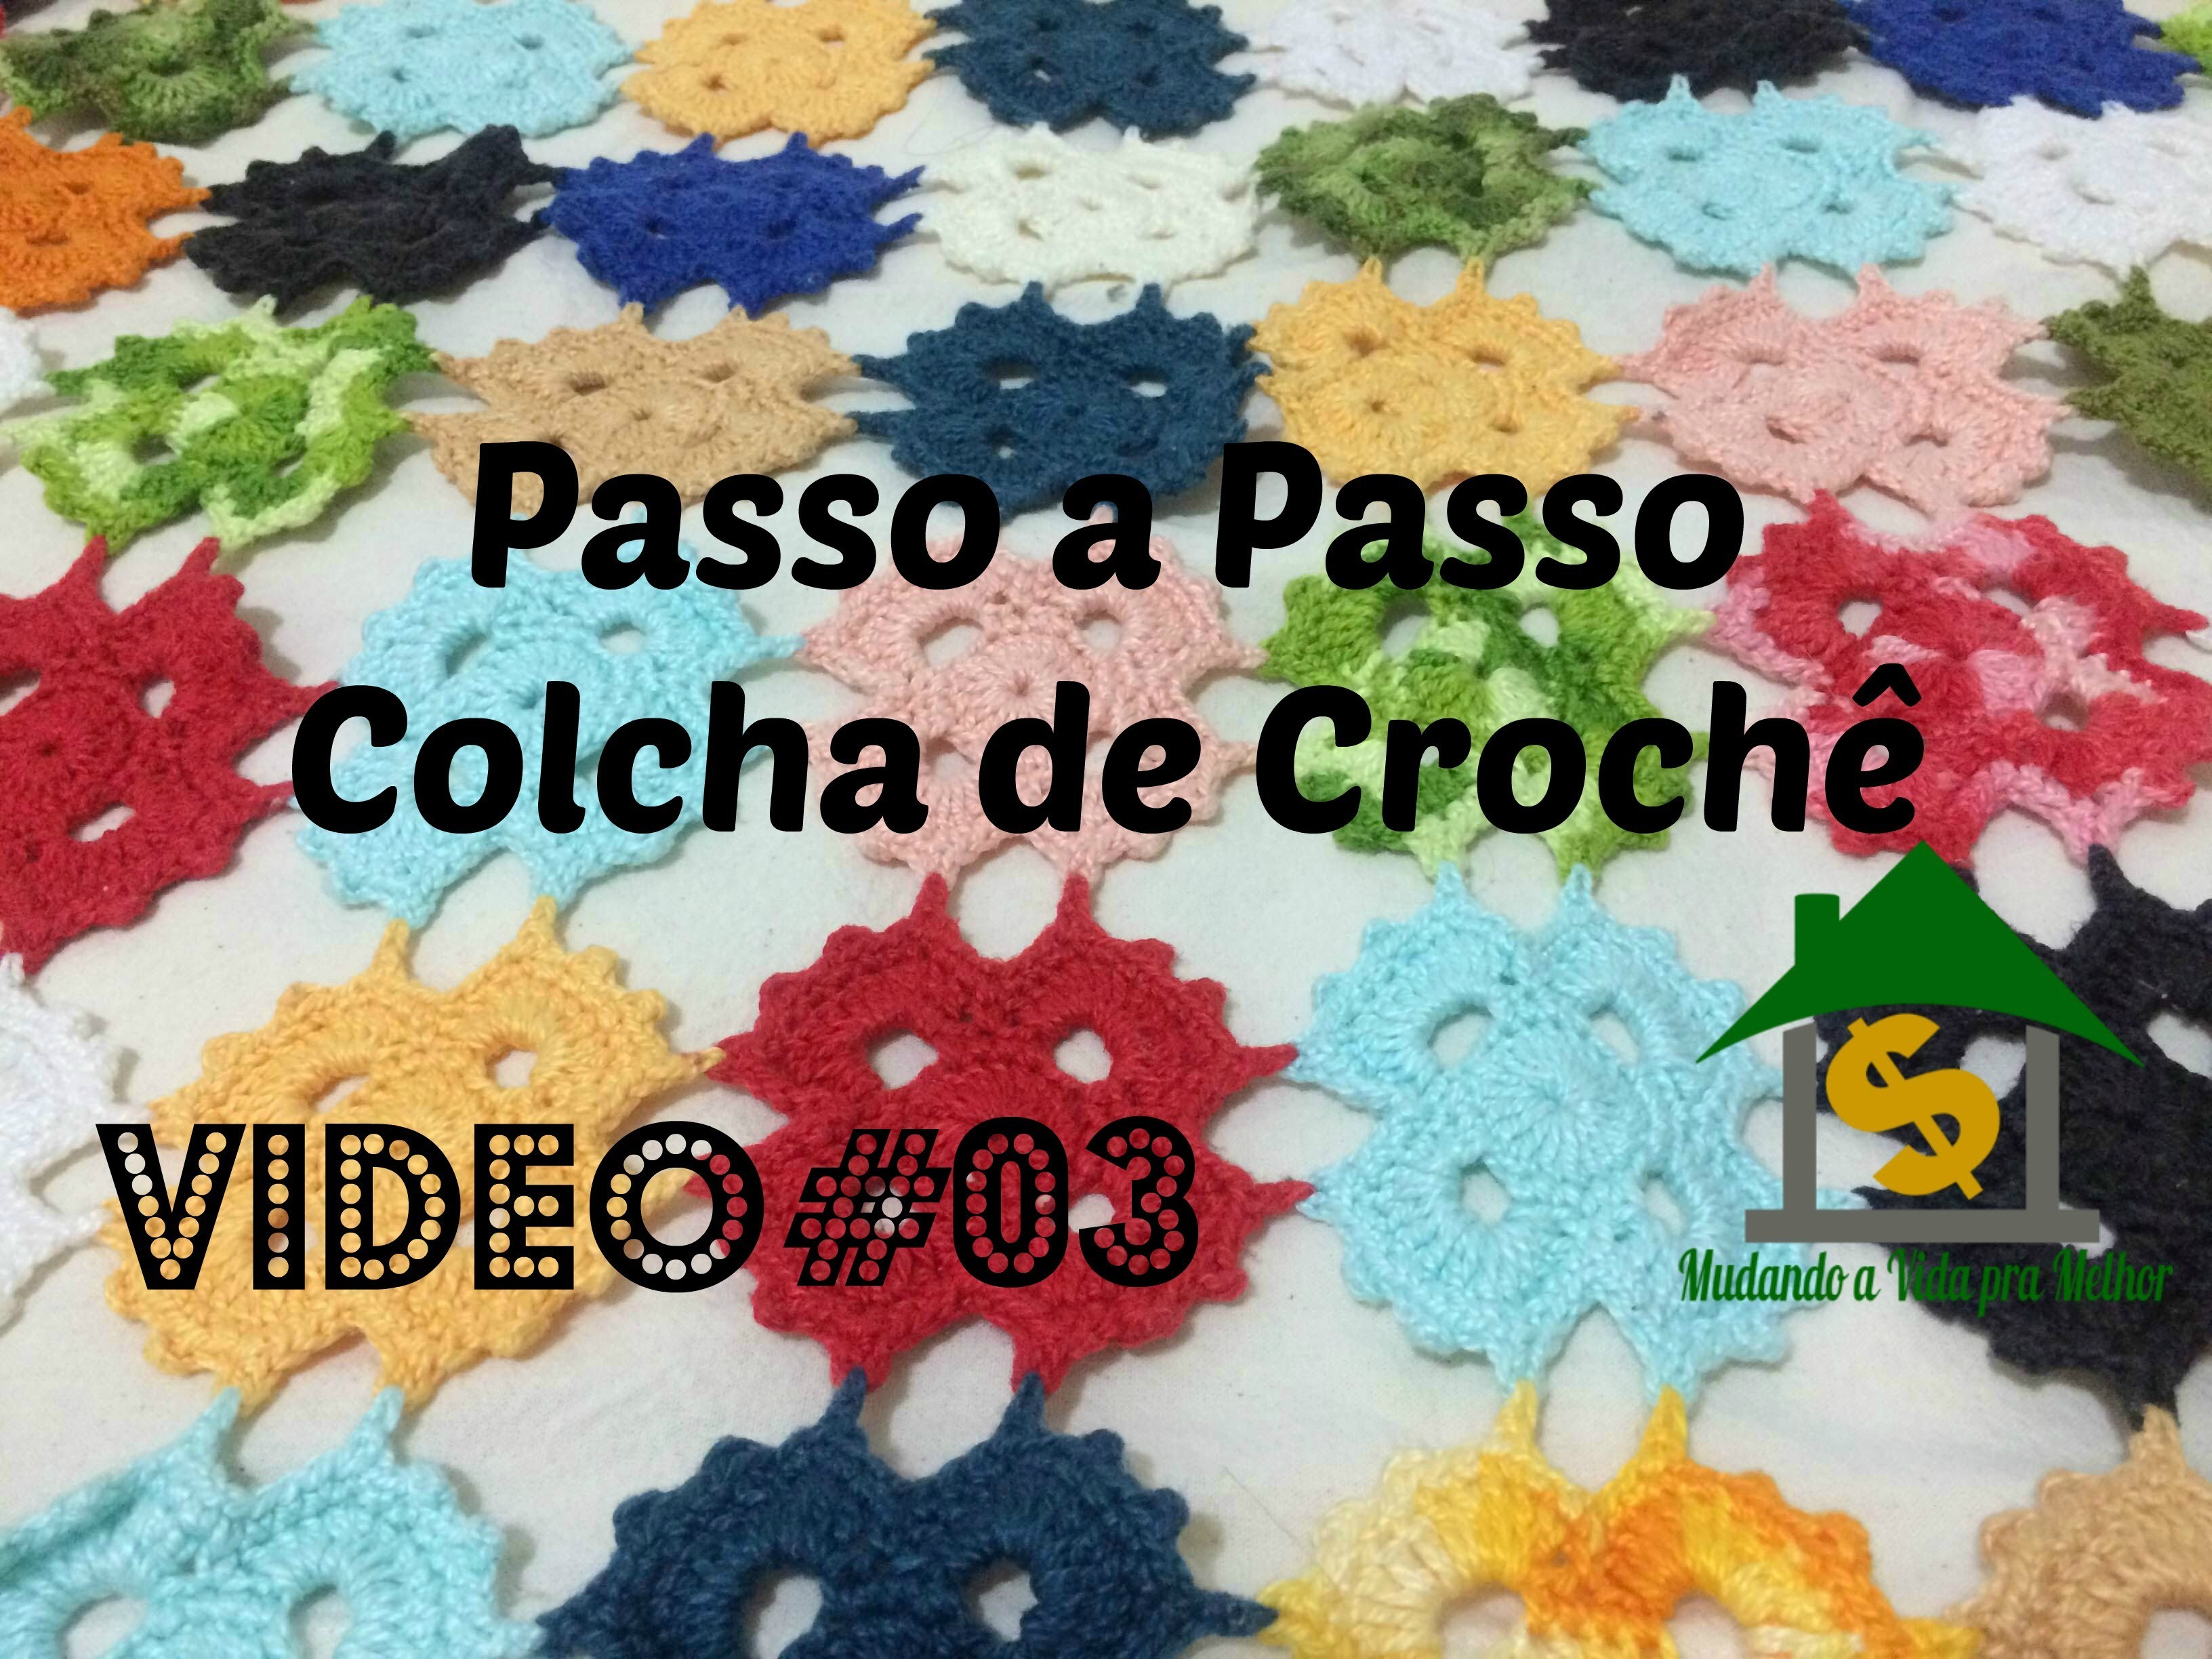 Colcha de Crochê Vídeo #03